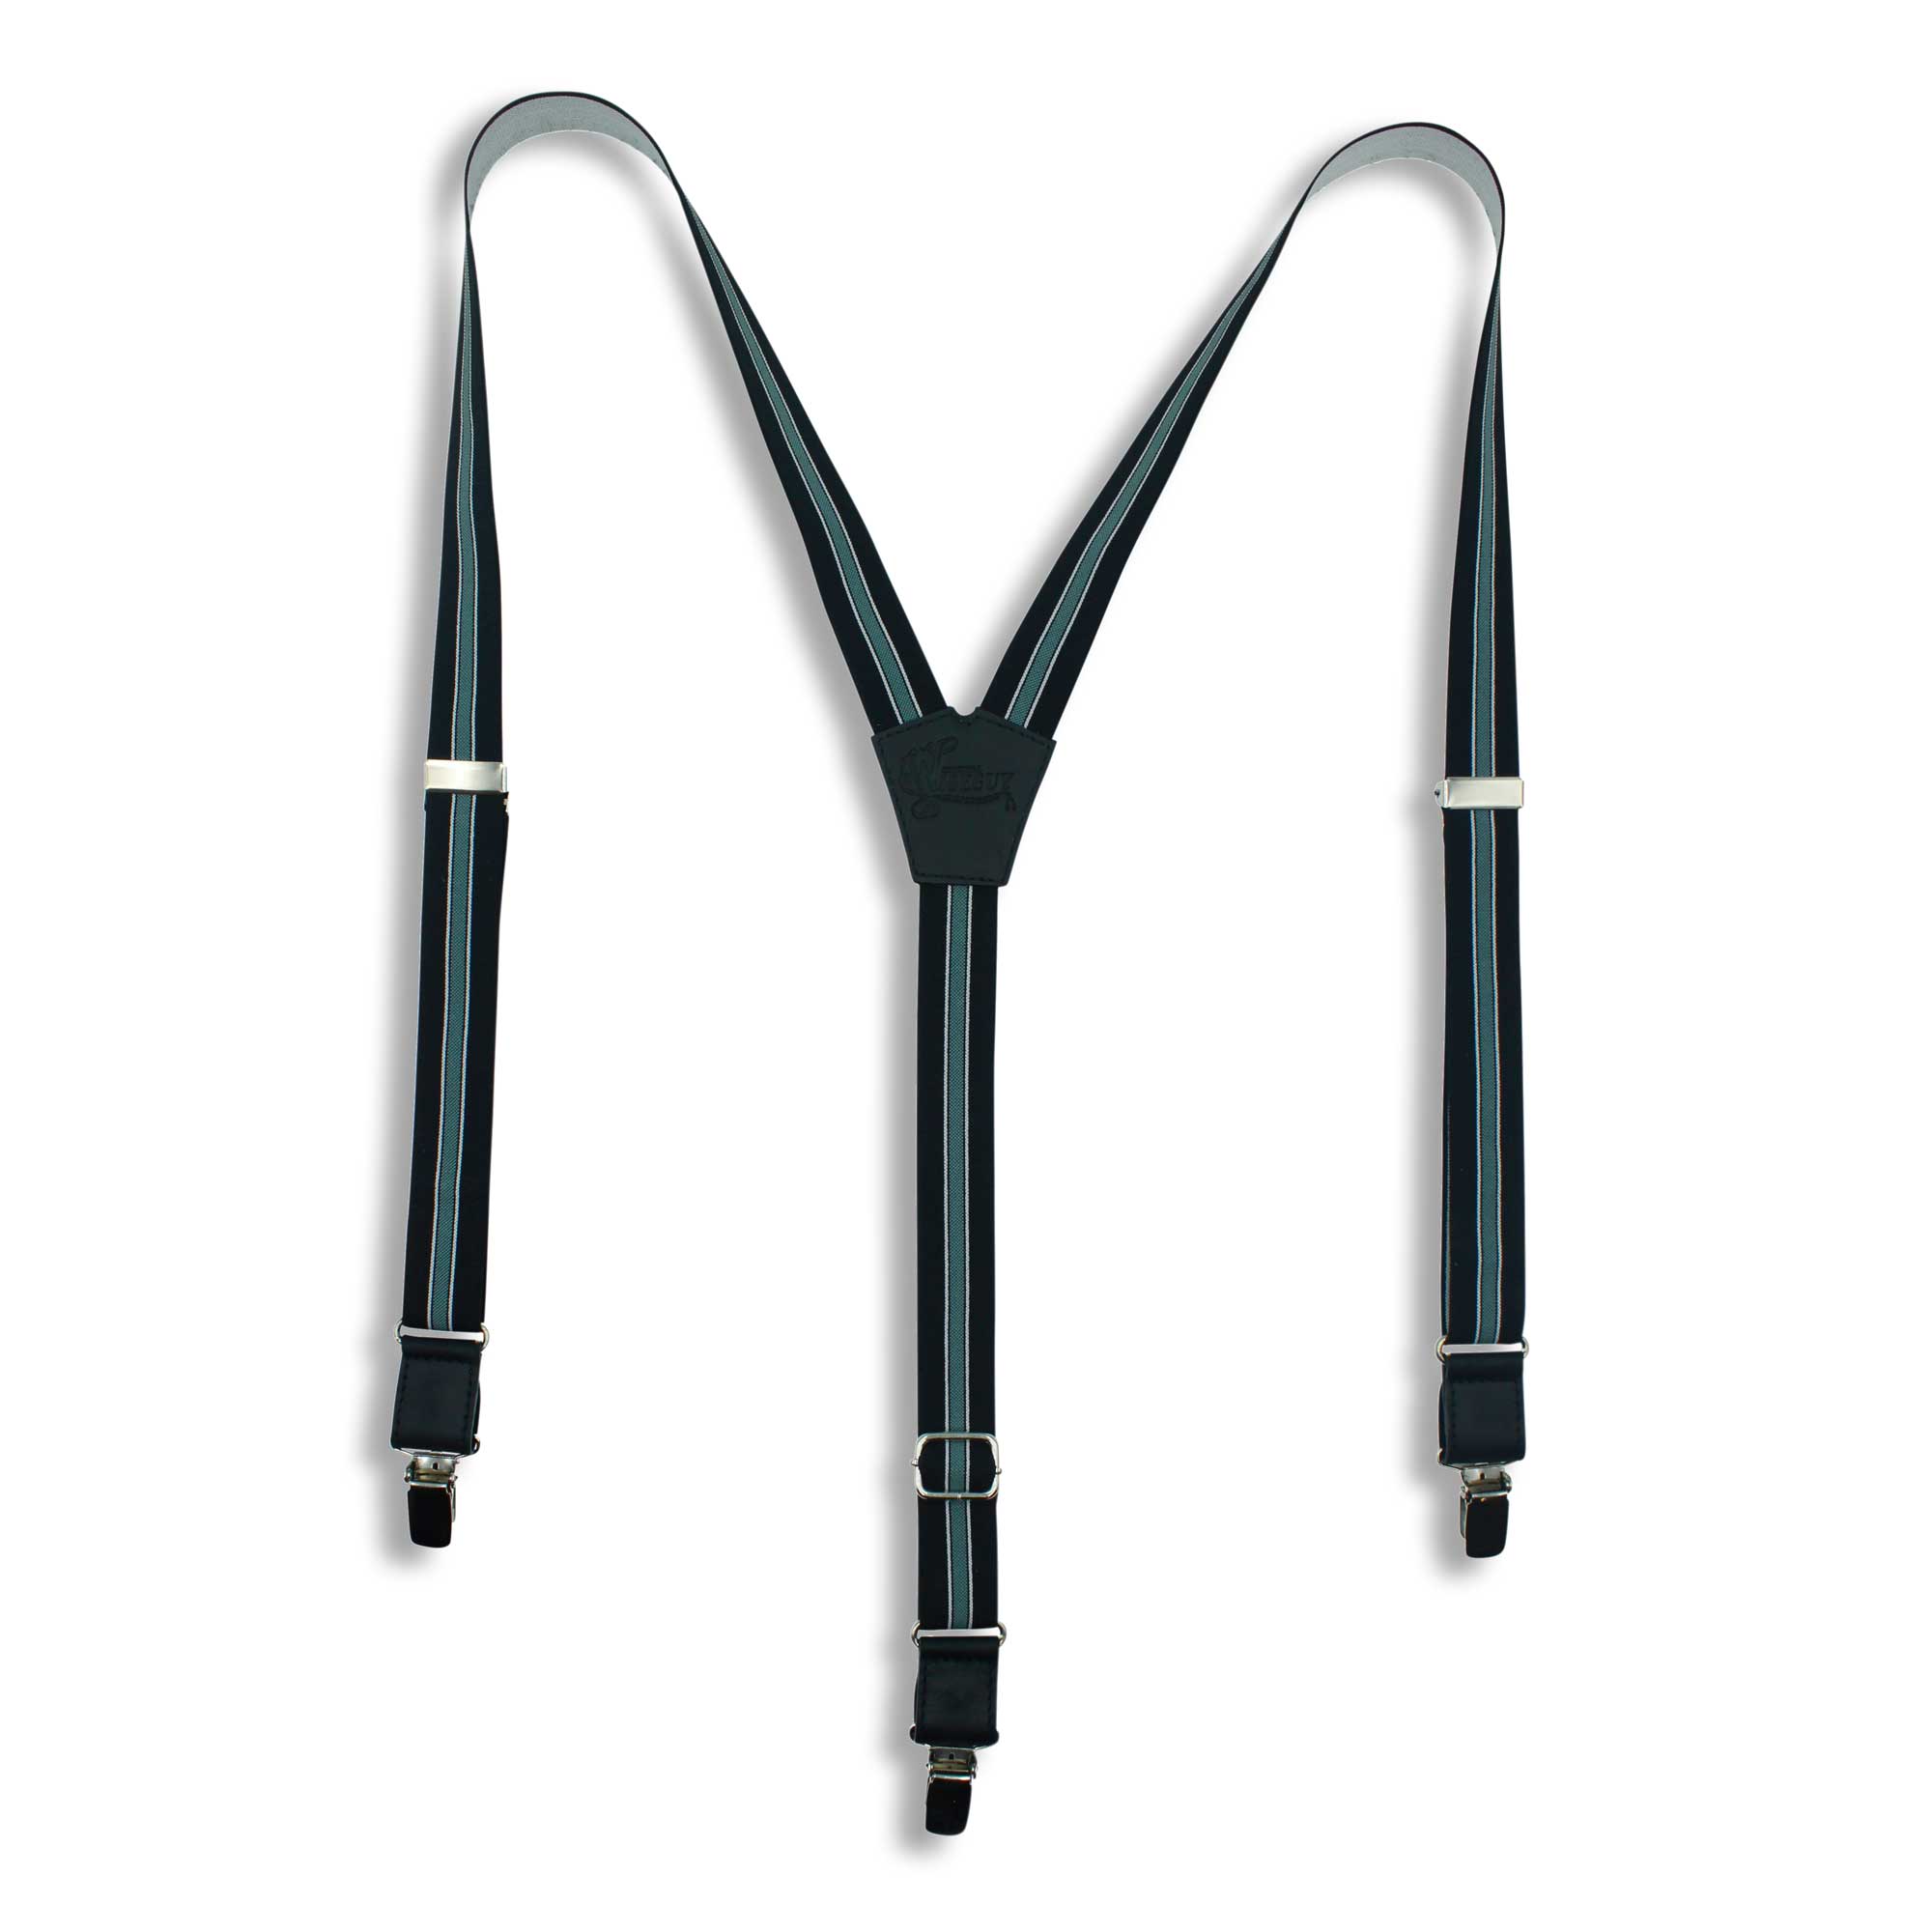 Laguna Seca Racing Suspenders slim straps ( 1 inch/2.54 cm) - Wiseguy Suspenders